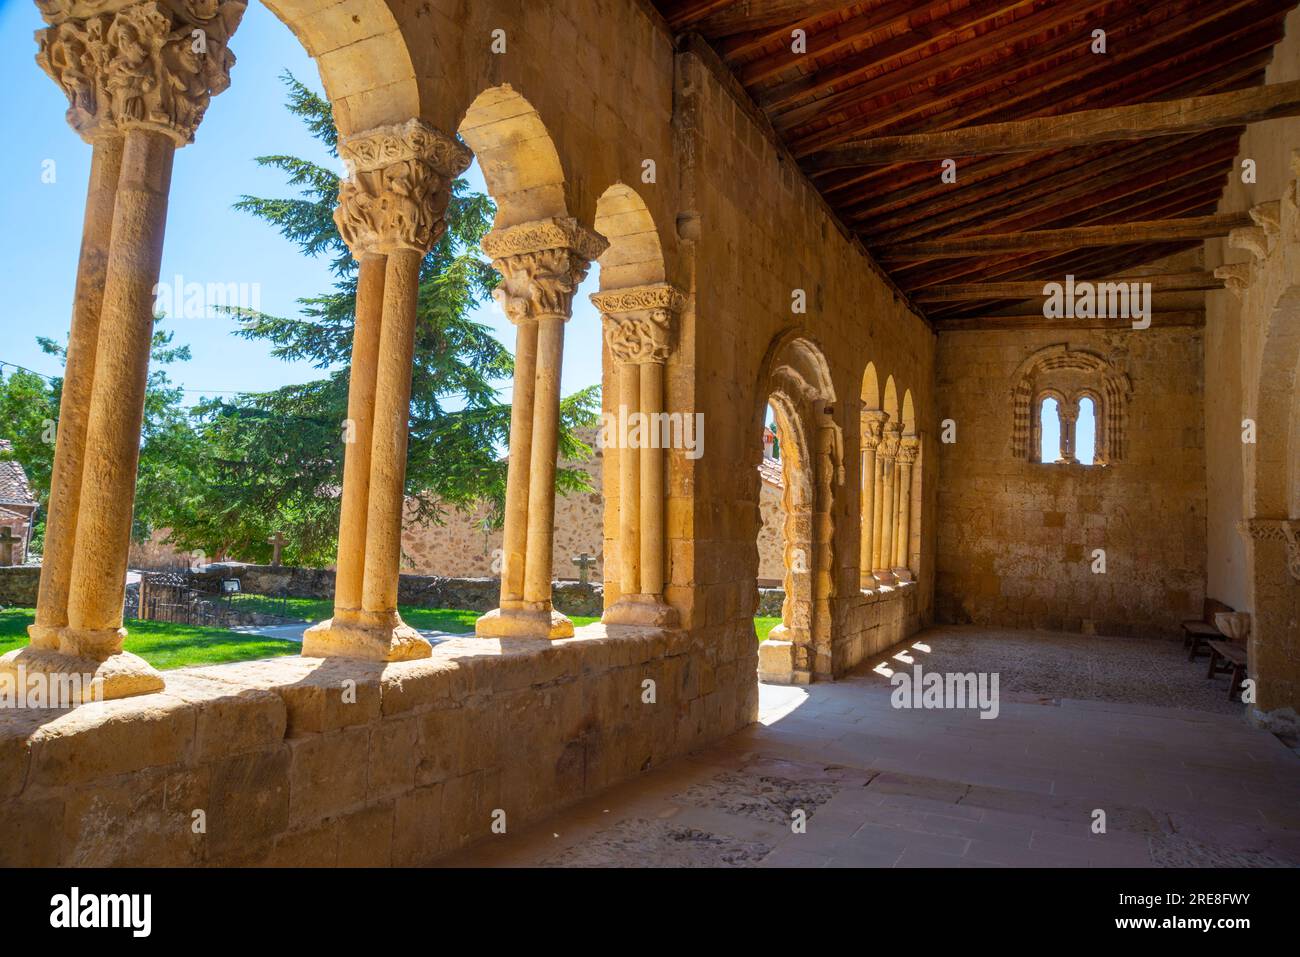 Atrium of San Miguel church. Sotosalbos, Segovia province, Castilla Leon, Spain. Stock Photo